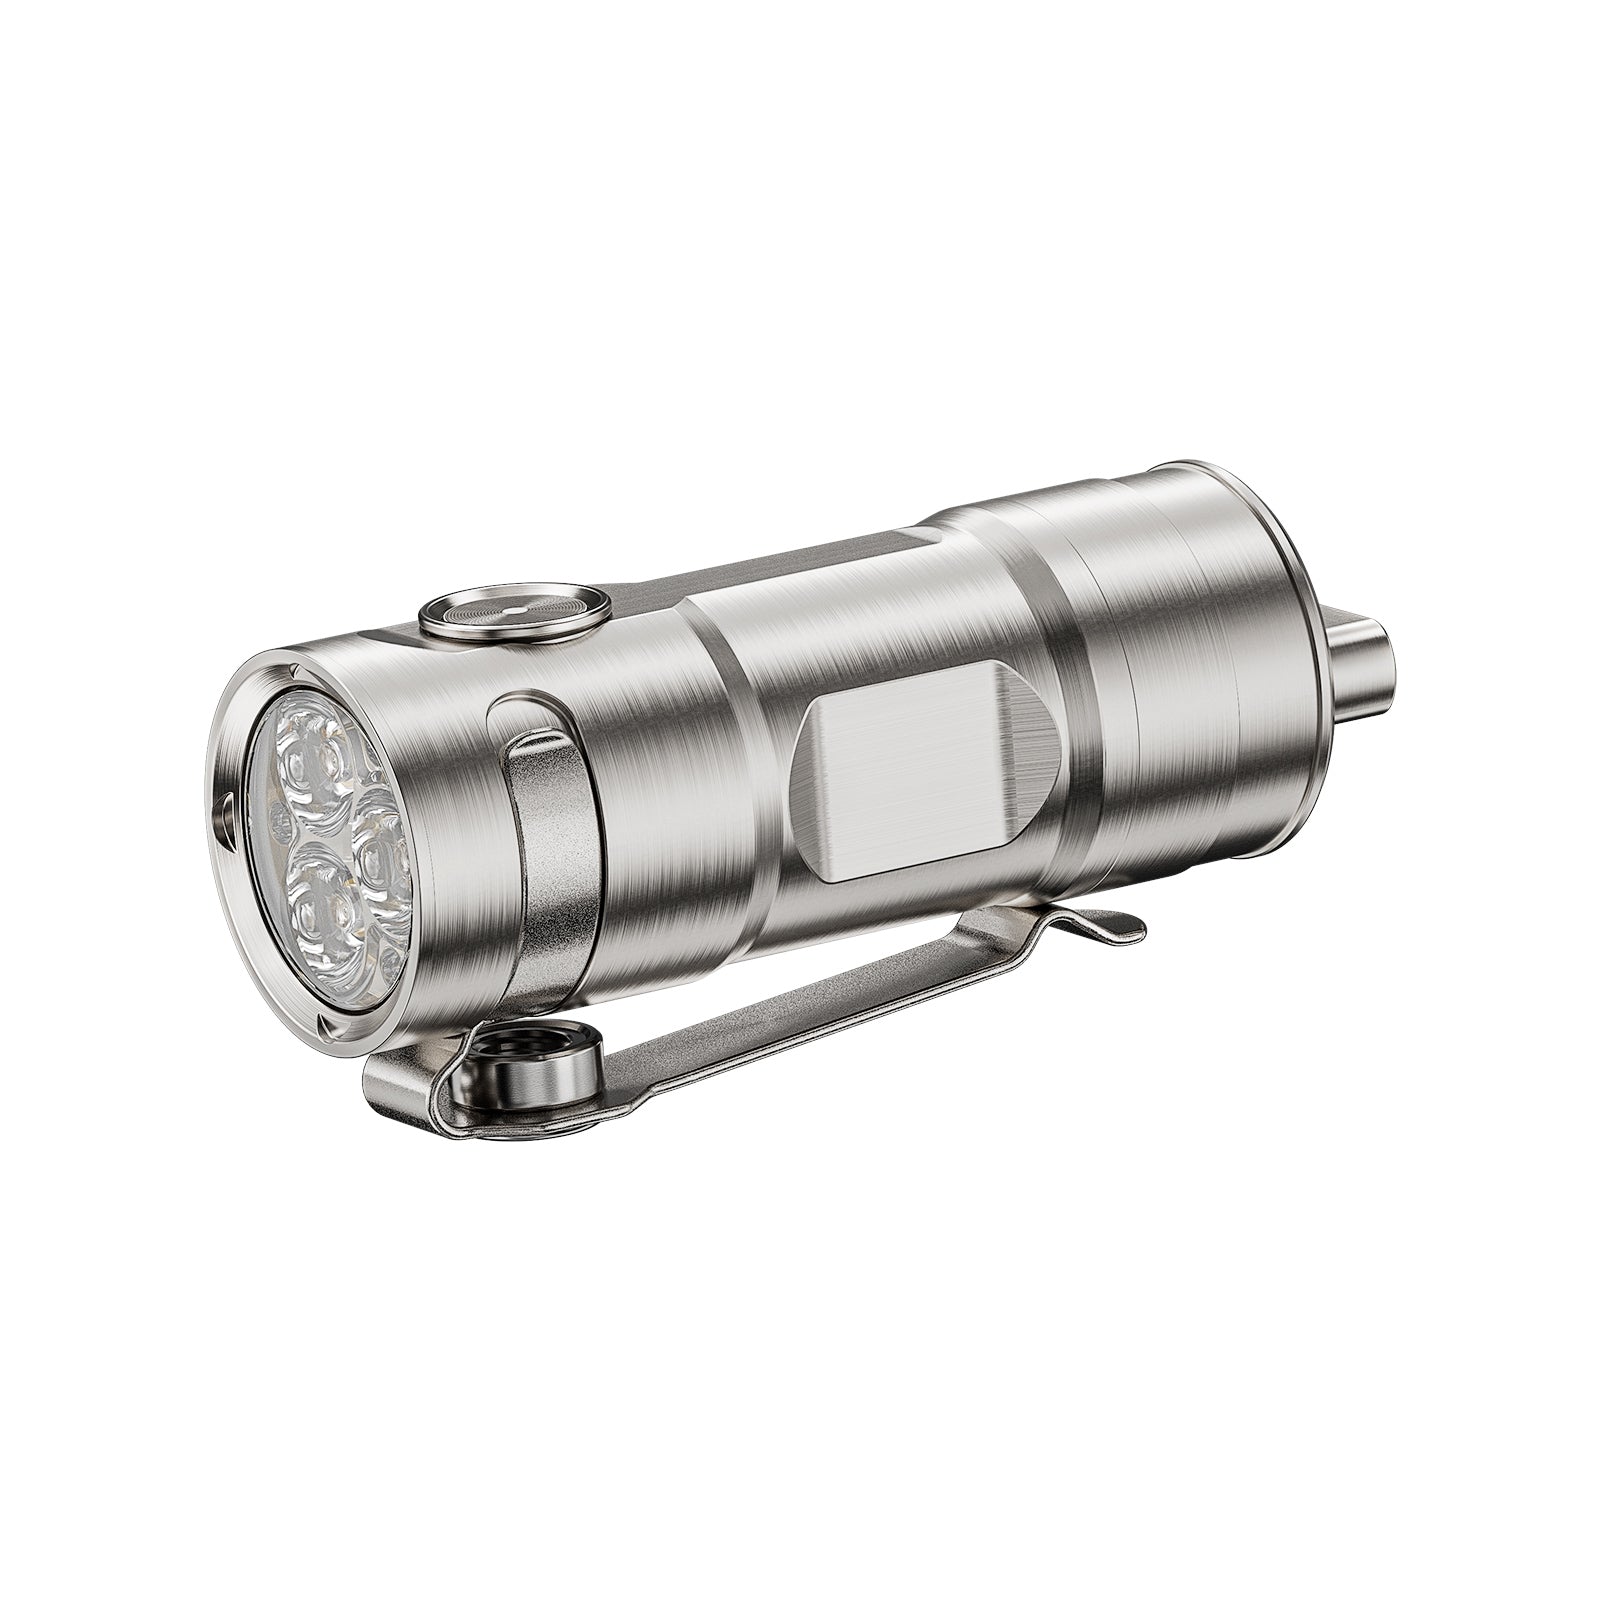 RovyVon Search Series S3 Ti 1800 Lumens EDC Flashlight